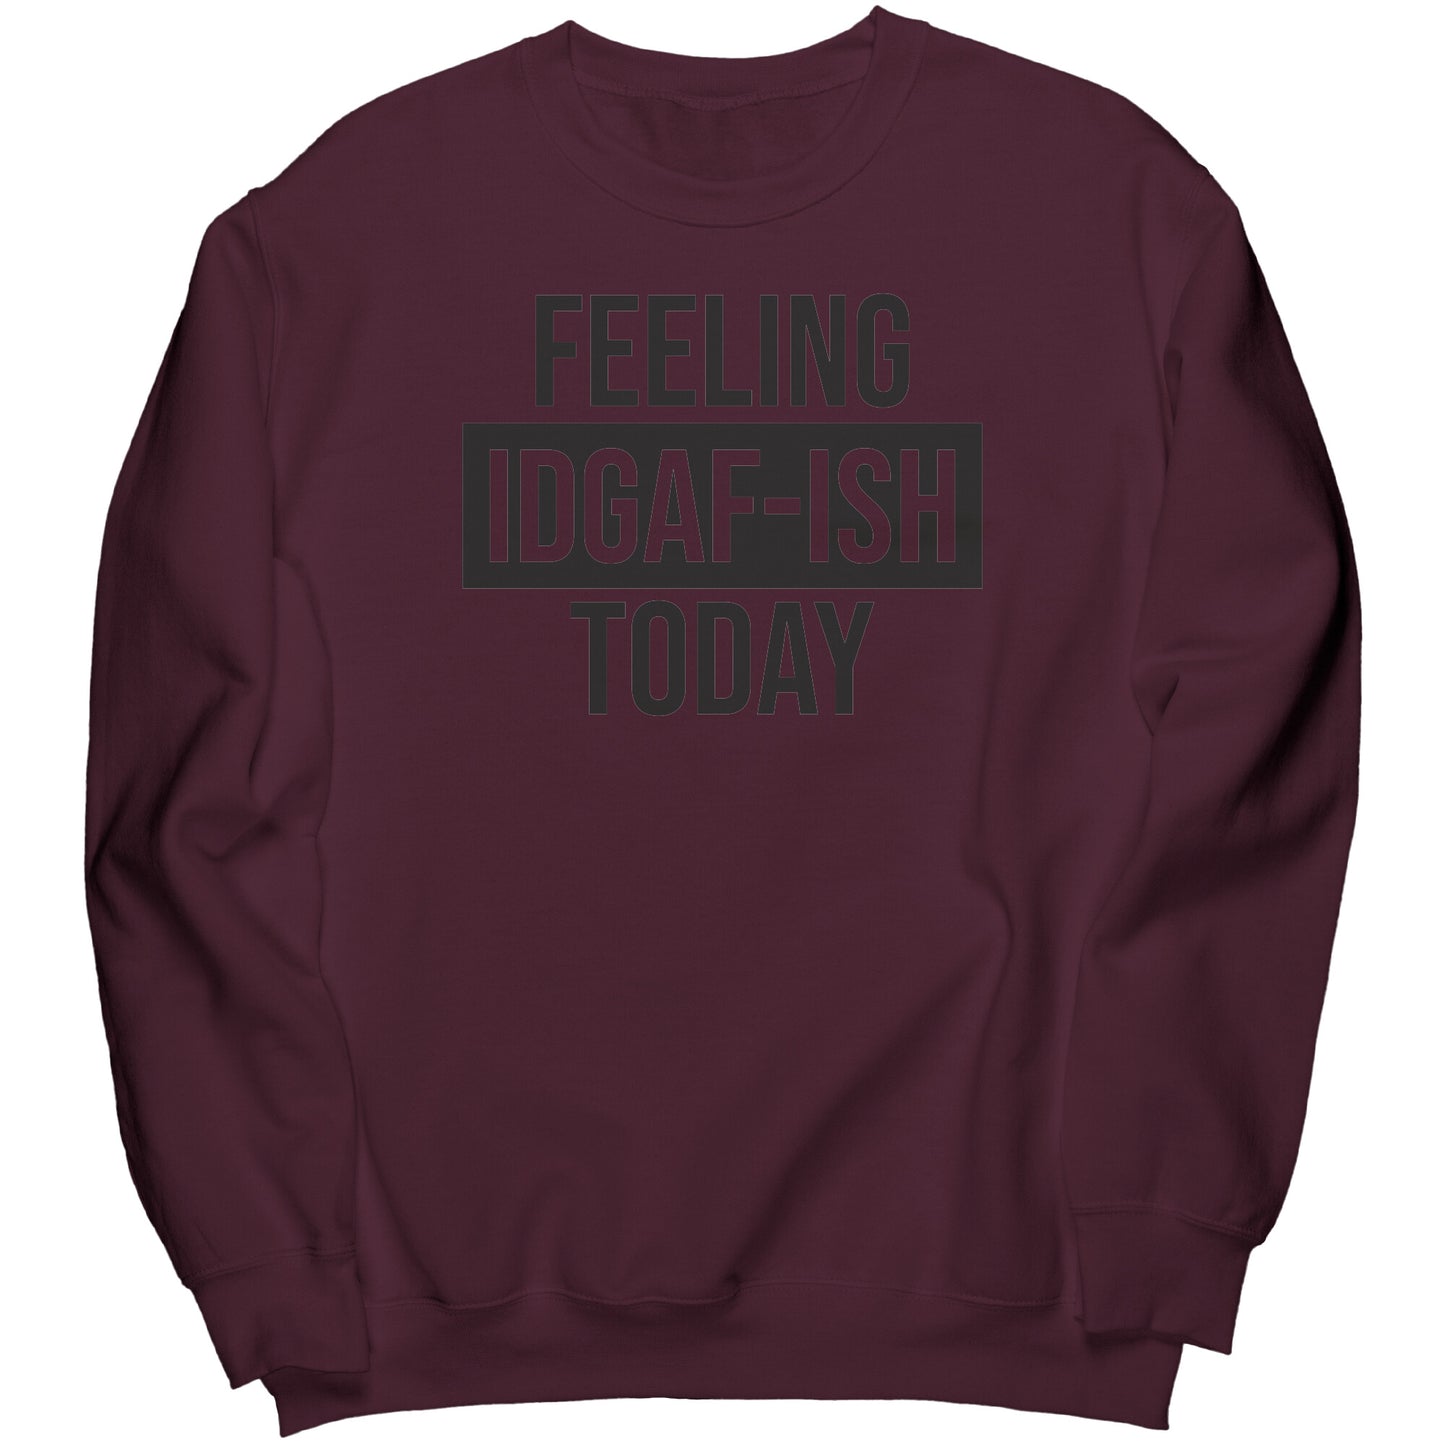 IDGAF-ISH Crew Sweatshirt